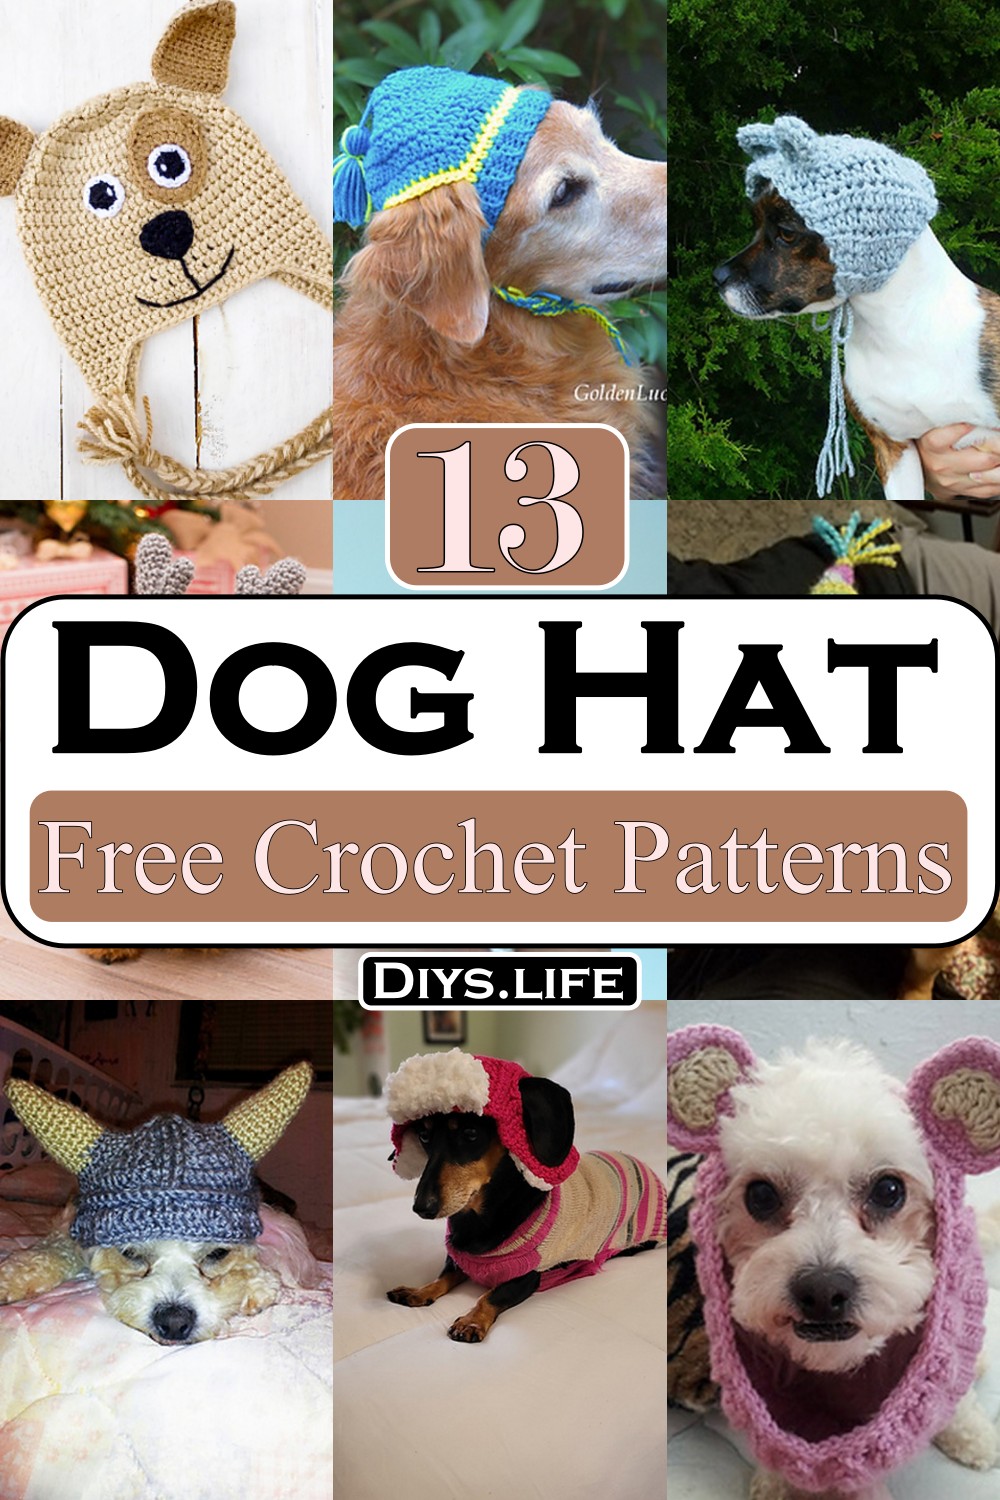 Crochet Dog Hat Patterns